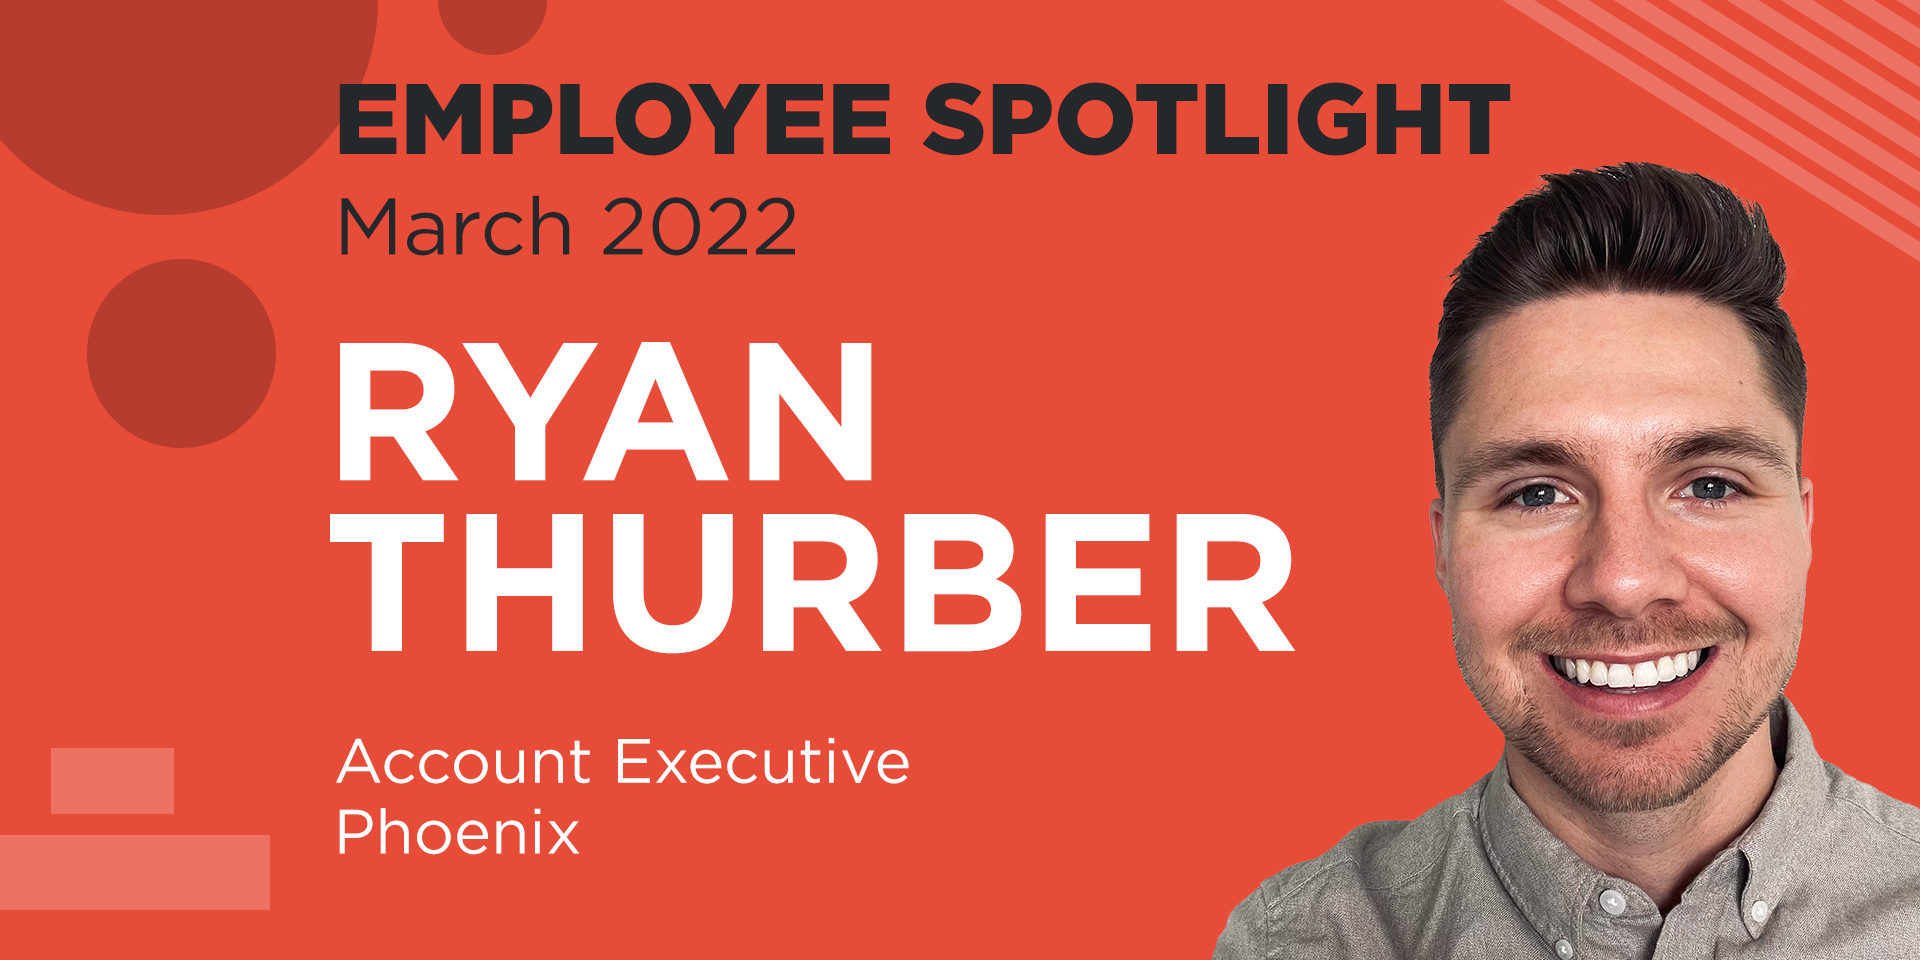 ryan thurber employee spotlight